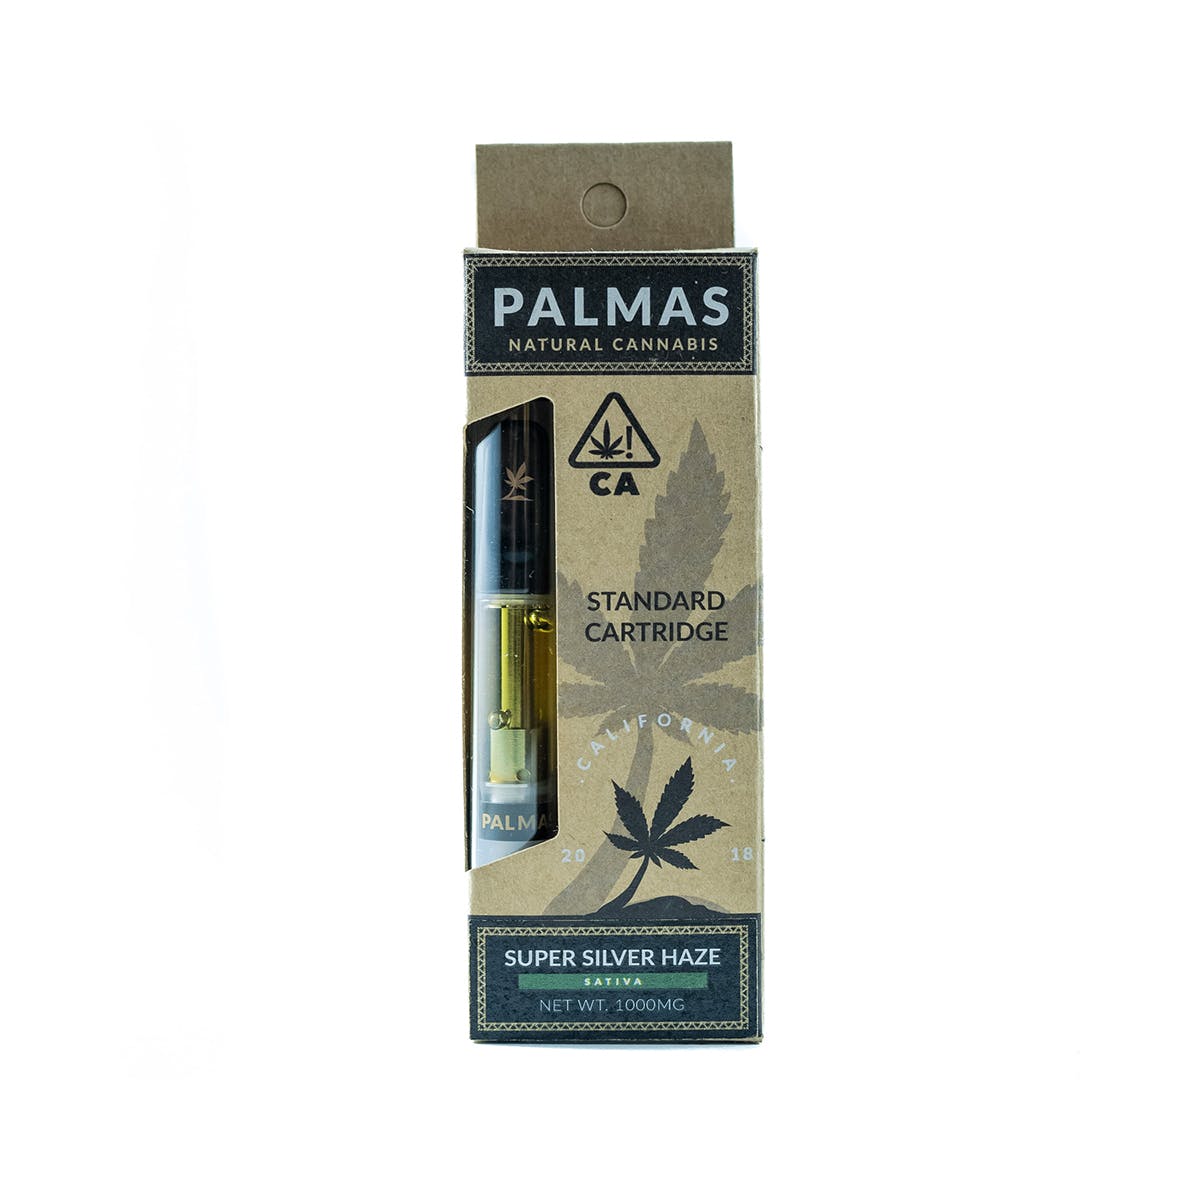 Palmas Standard Cartridge - Super Silver Haze